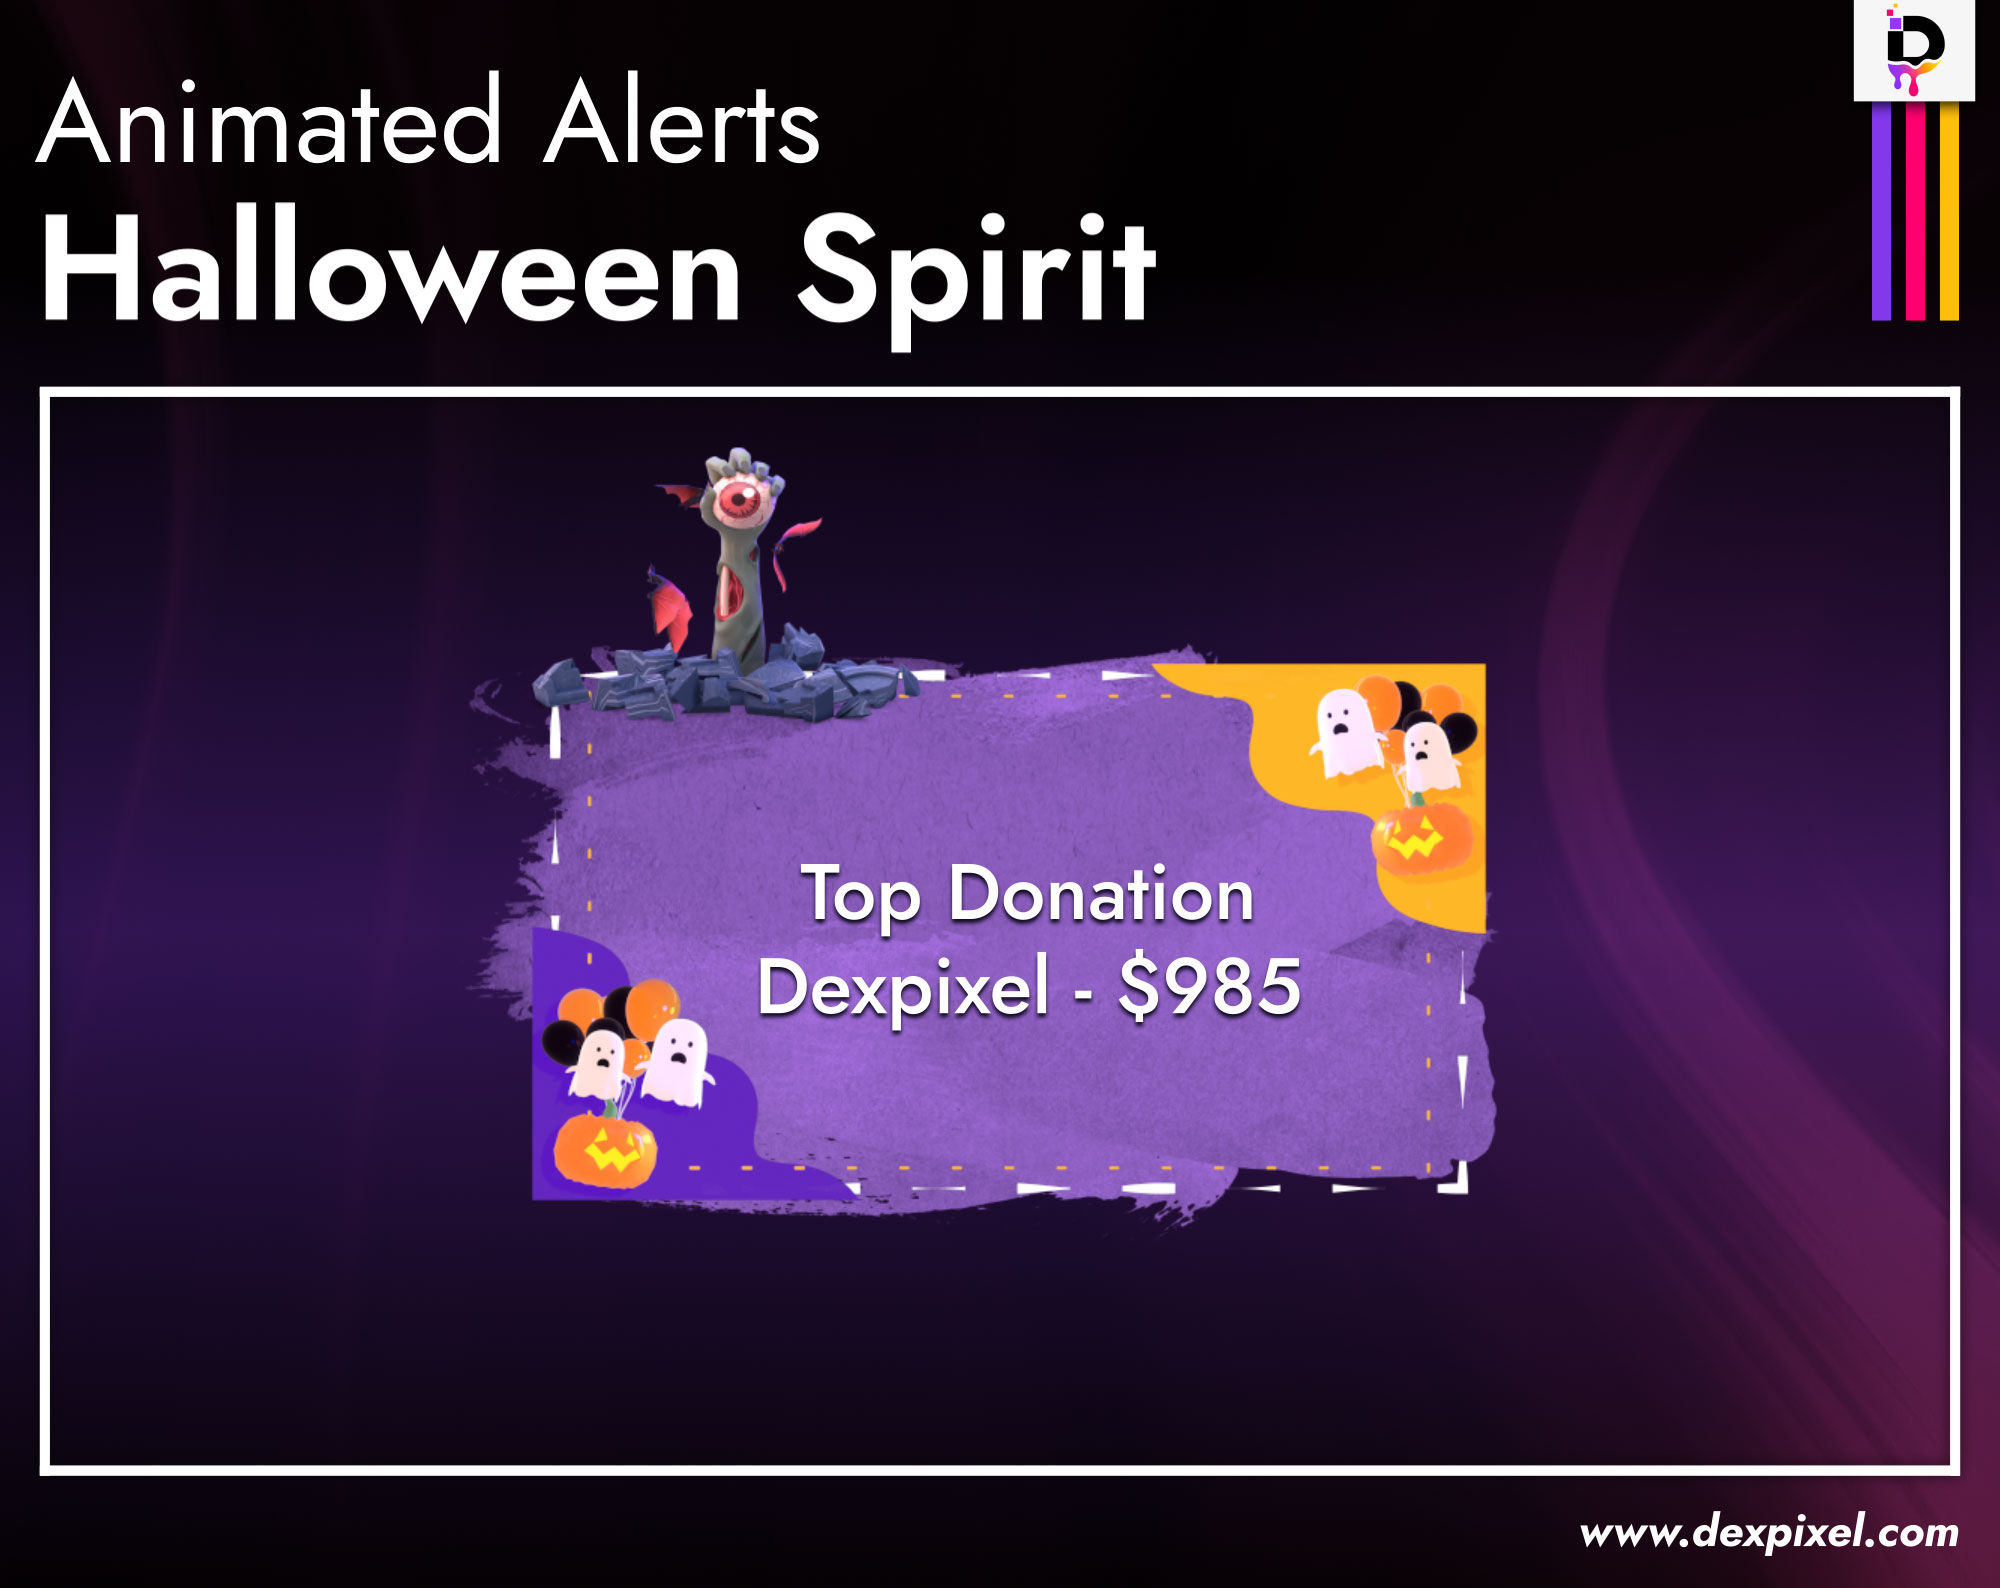 Animated Alerts Dexpixel Halloween Spirit